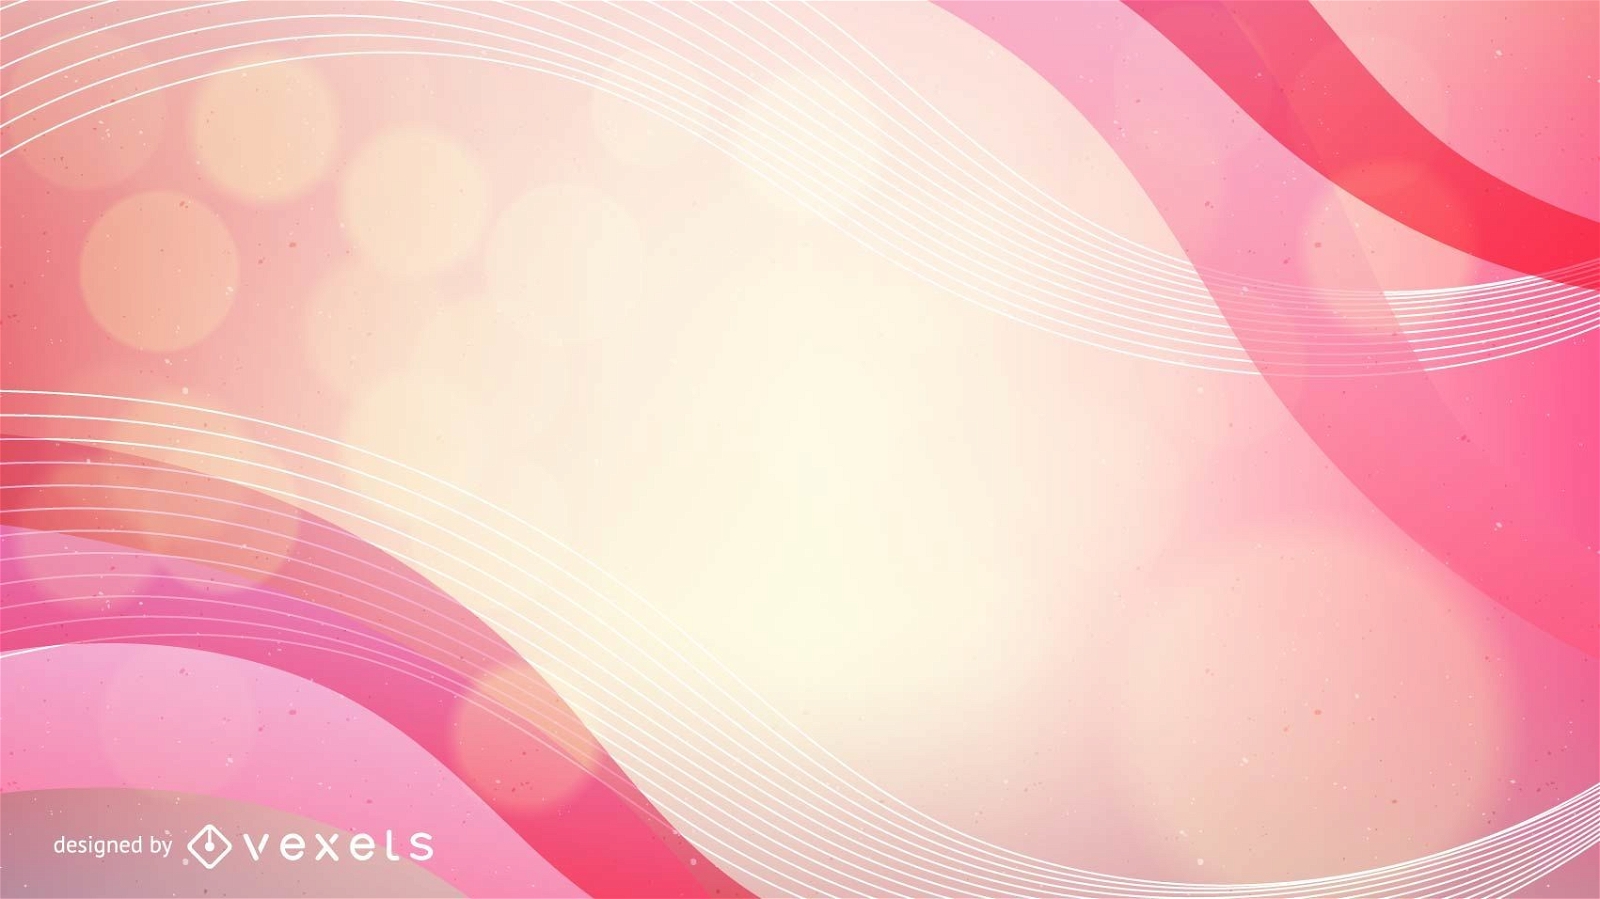 Fondo de líneas onduladas y espiral abstracto rosa